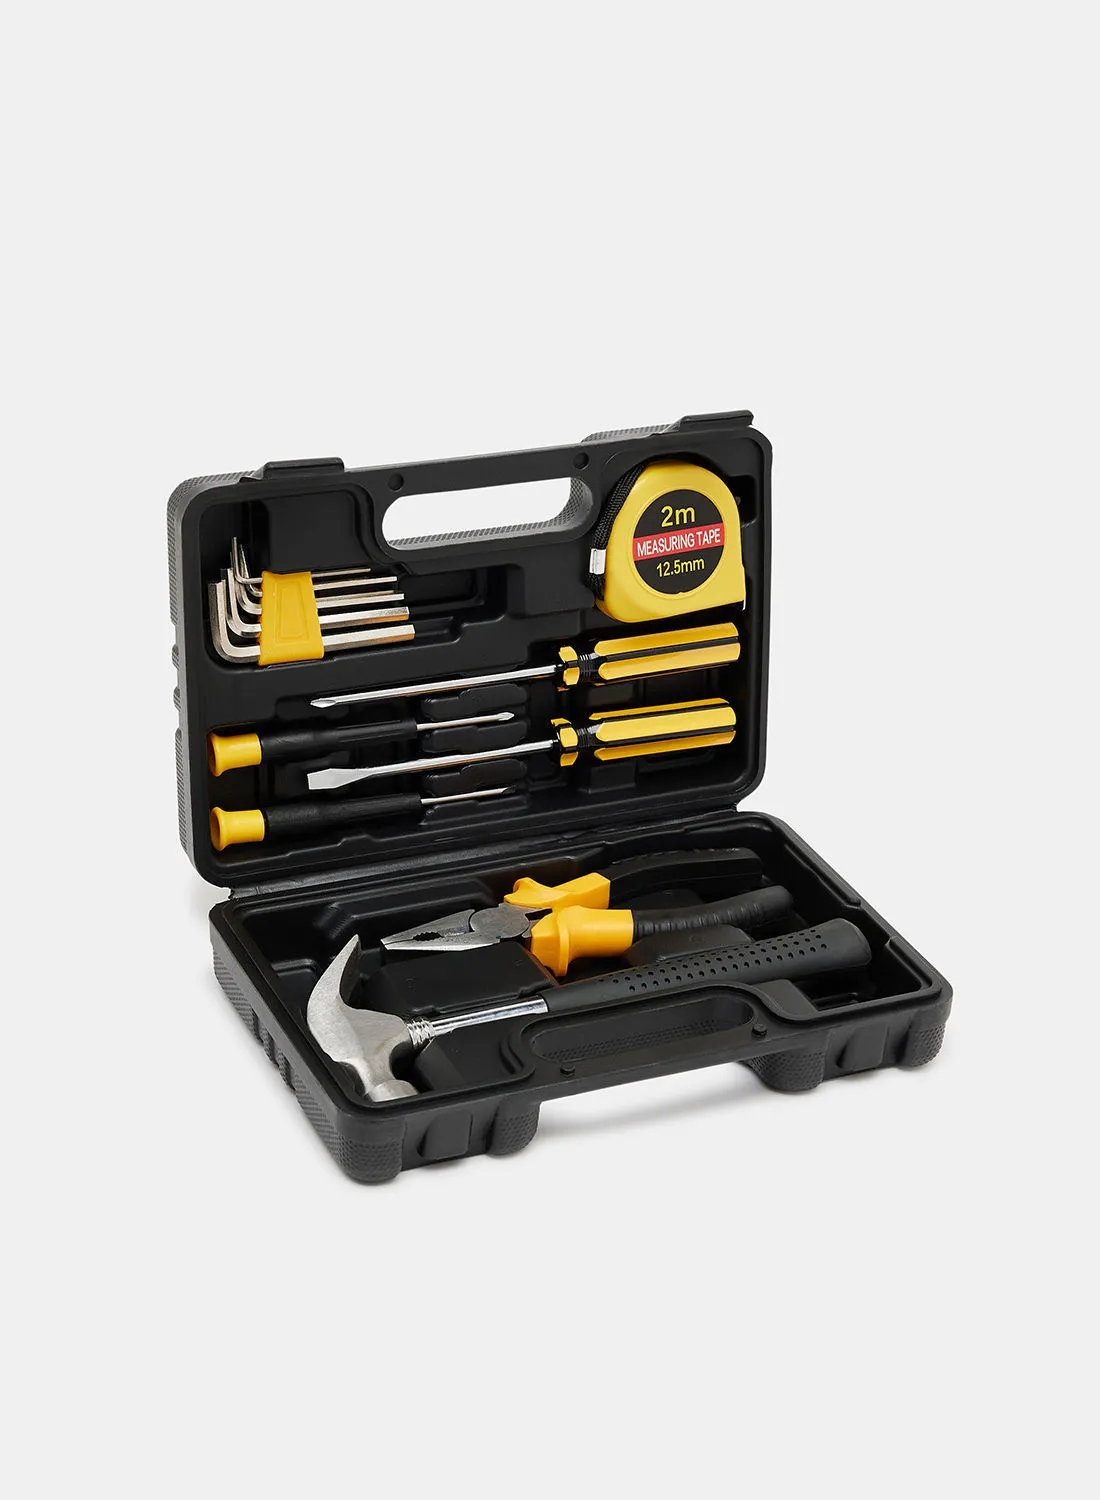 Amal Hardware Multitool Hand Tool Portable Auto Vehicle Car Household Repair Kit 12PCS Hammer Pliers Tools Set Box